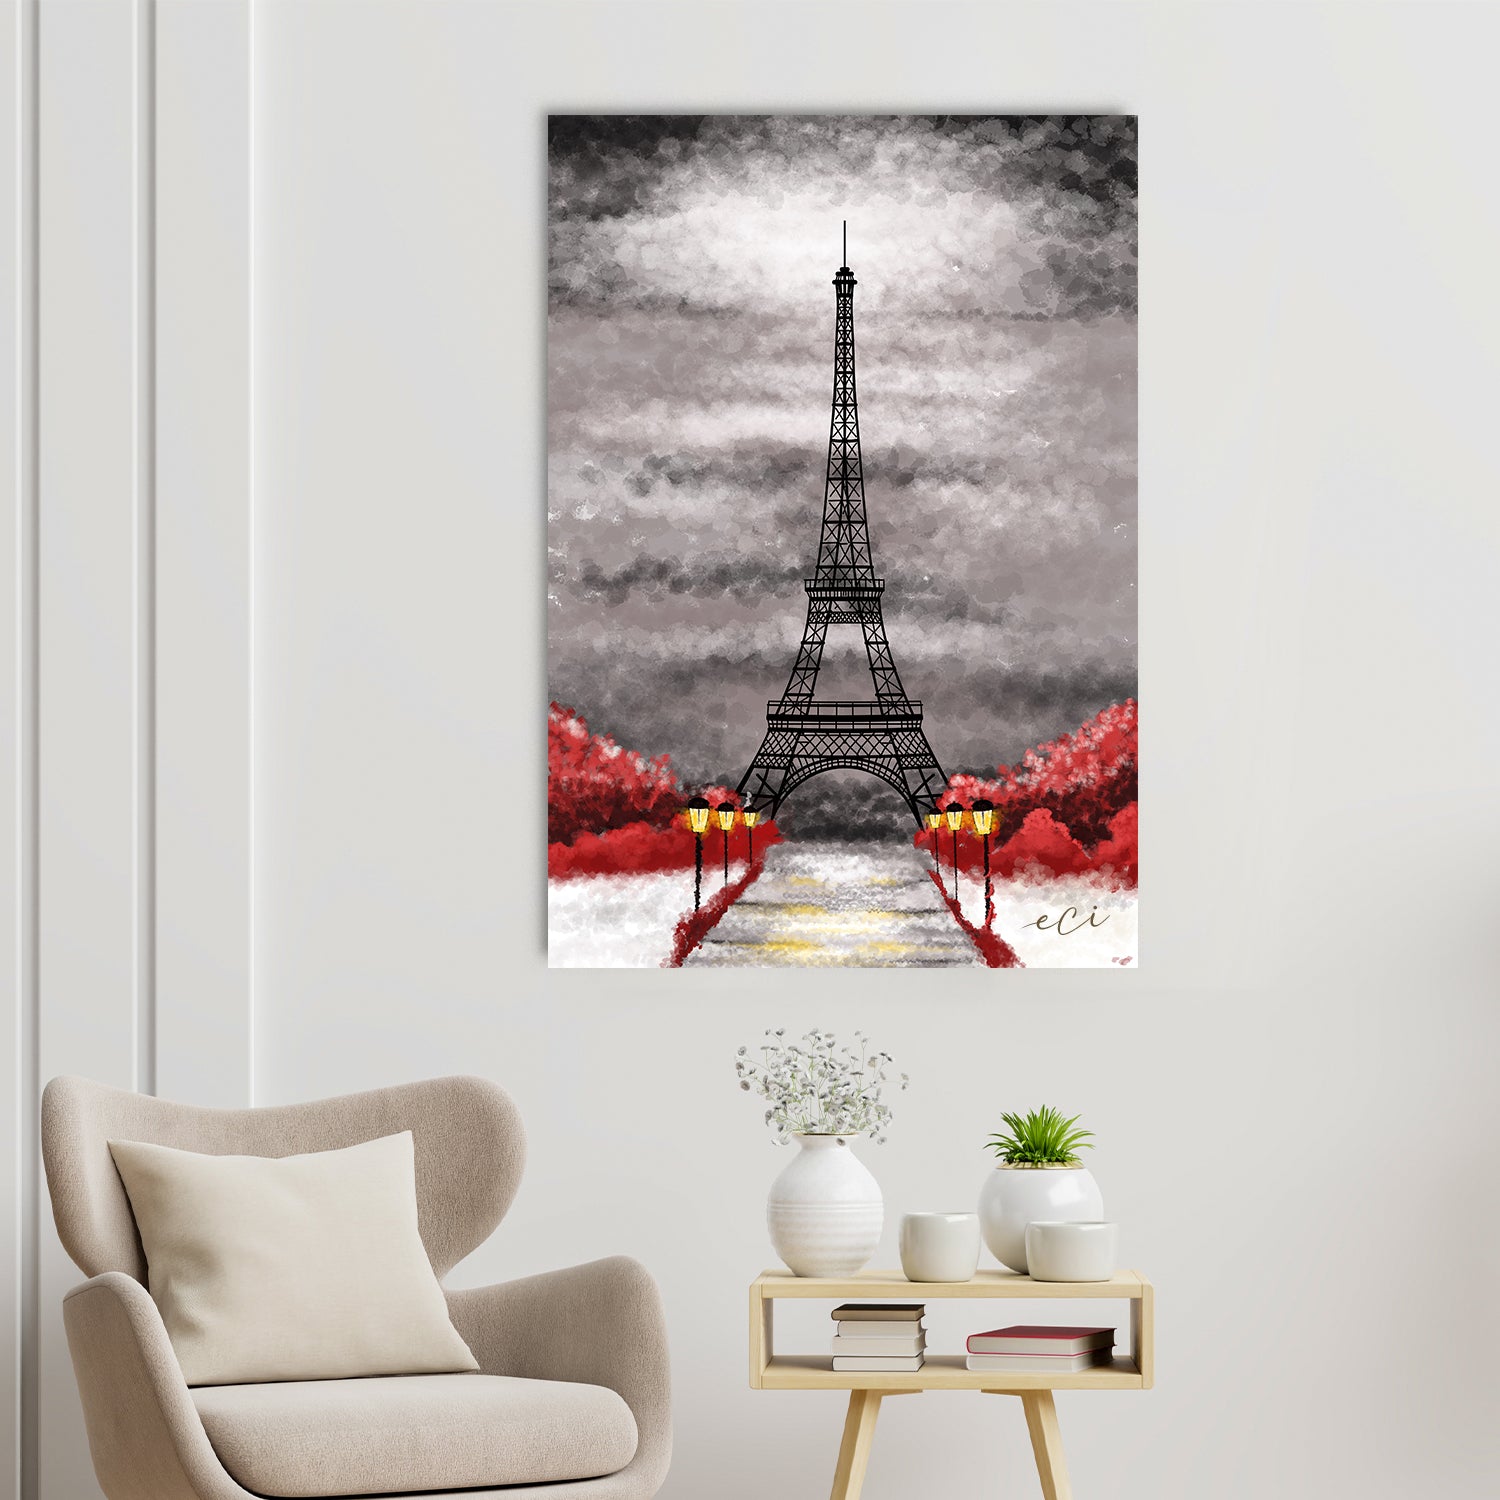 Paris Eiffel Tower Painting Digital Printed Canvas Wall Art